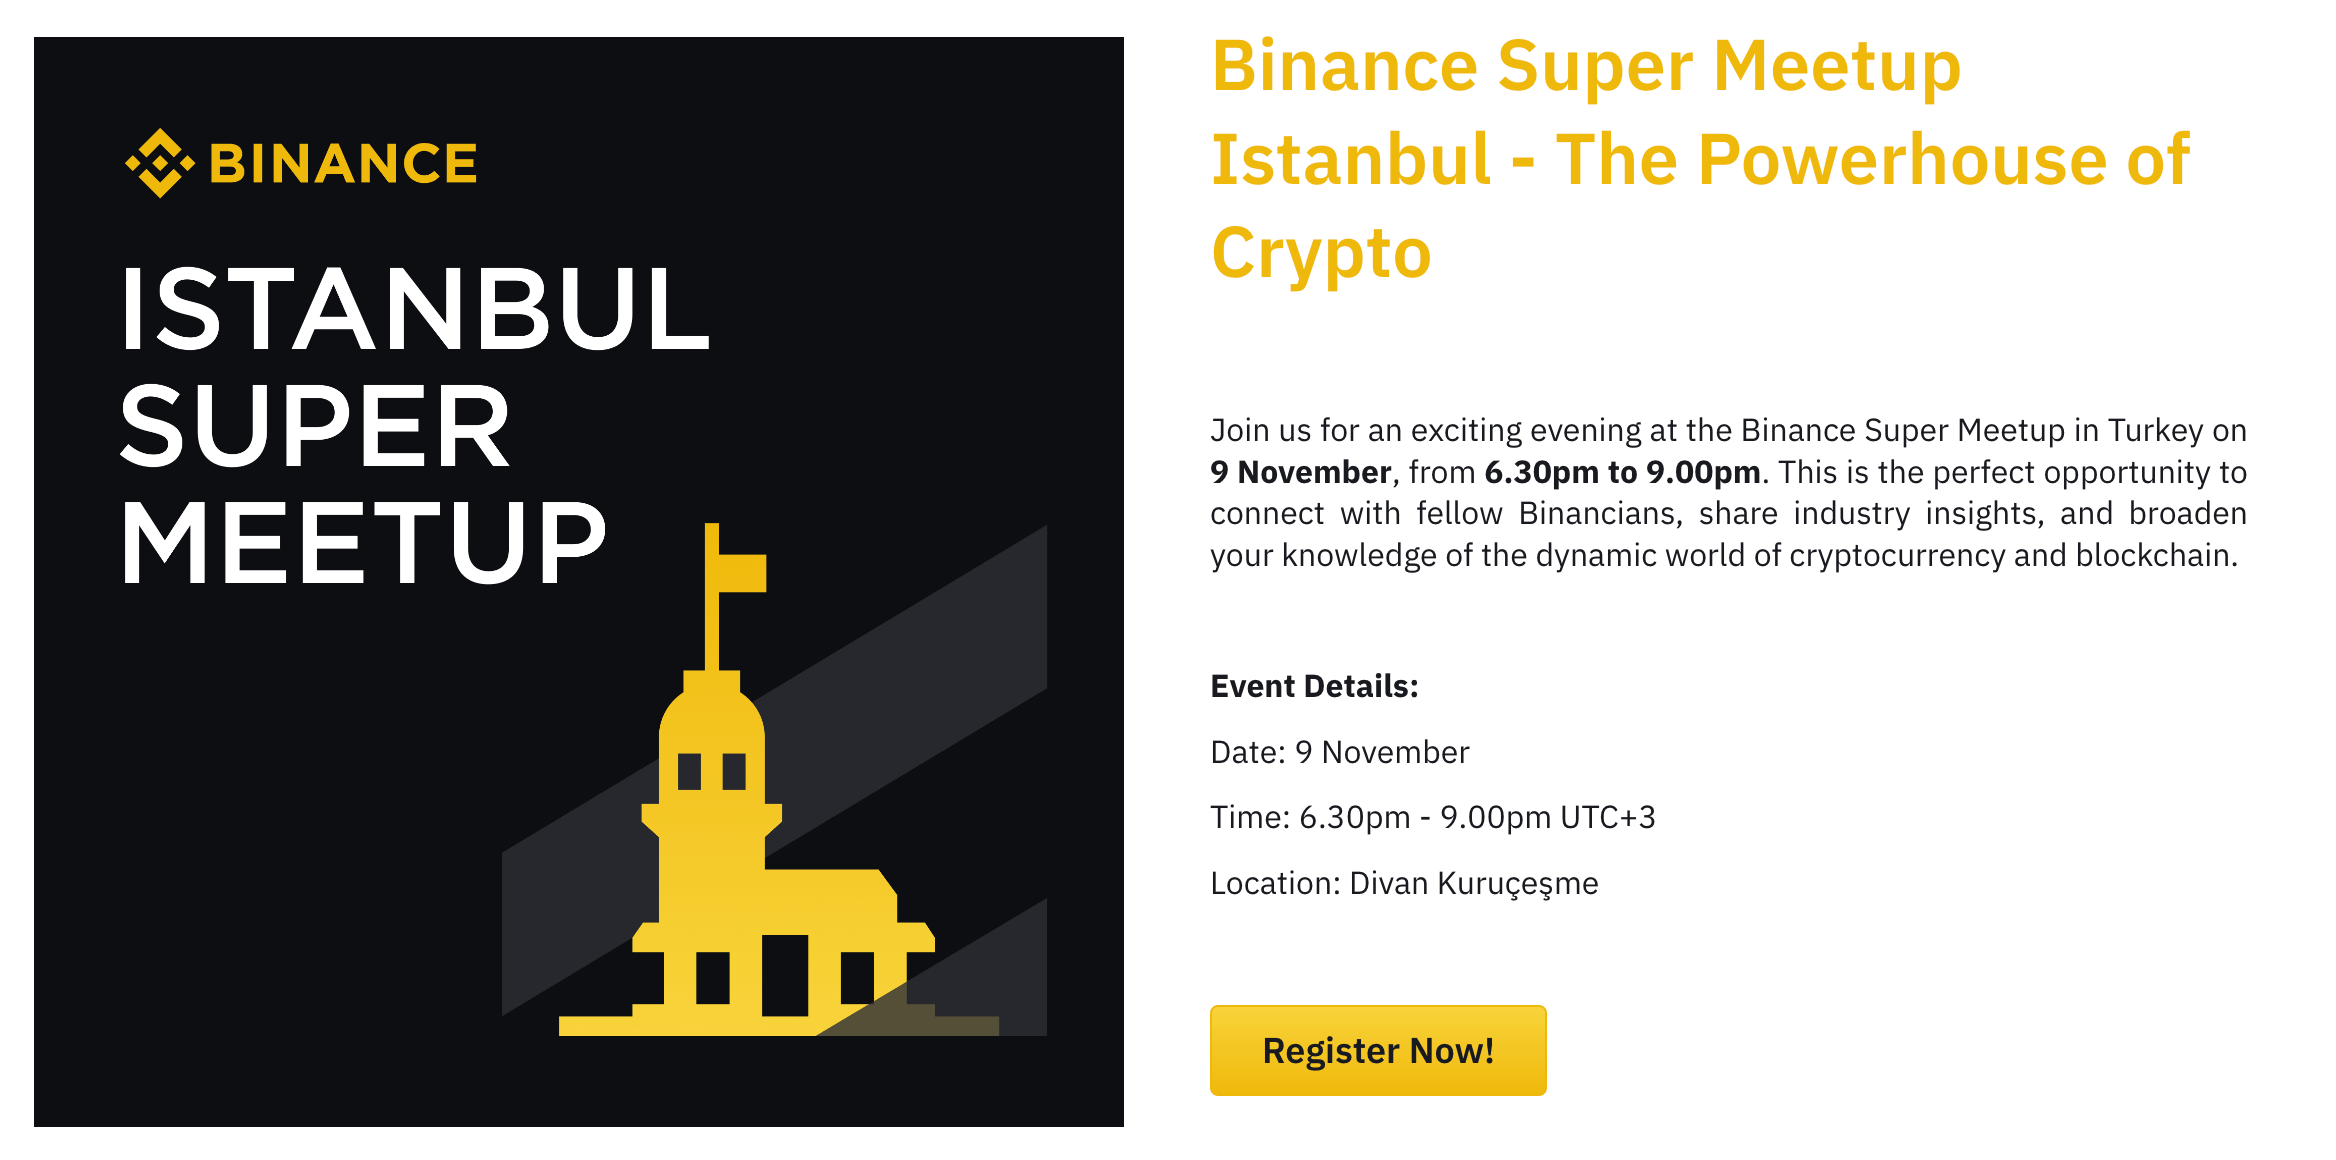 Binance Super Meetup Istanbul - The Powerhouse of Crypt